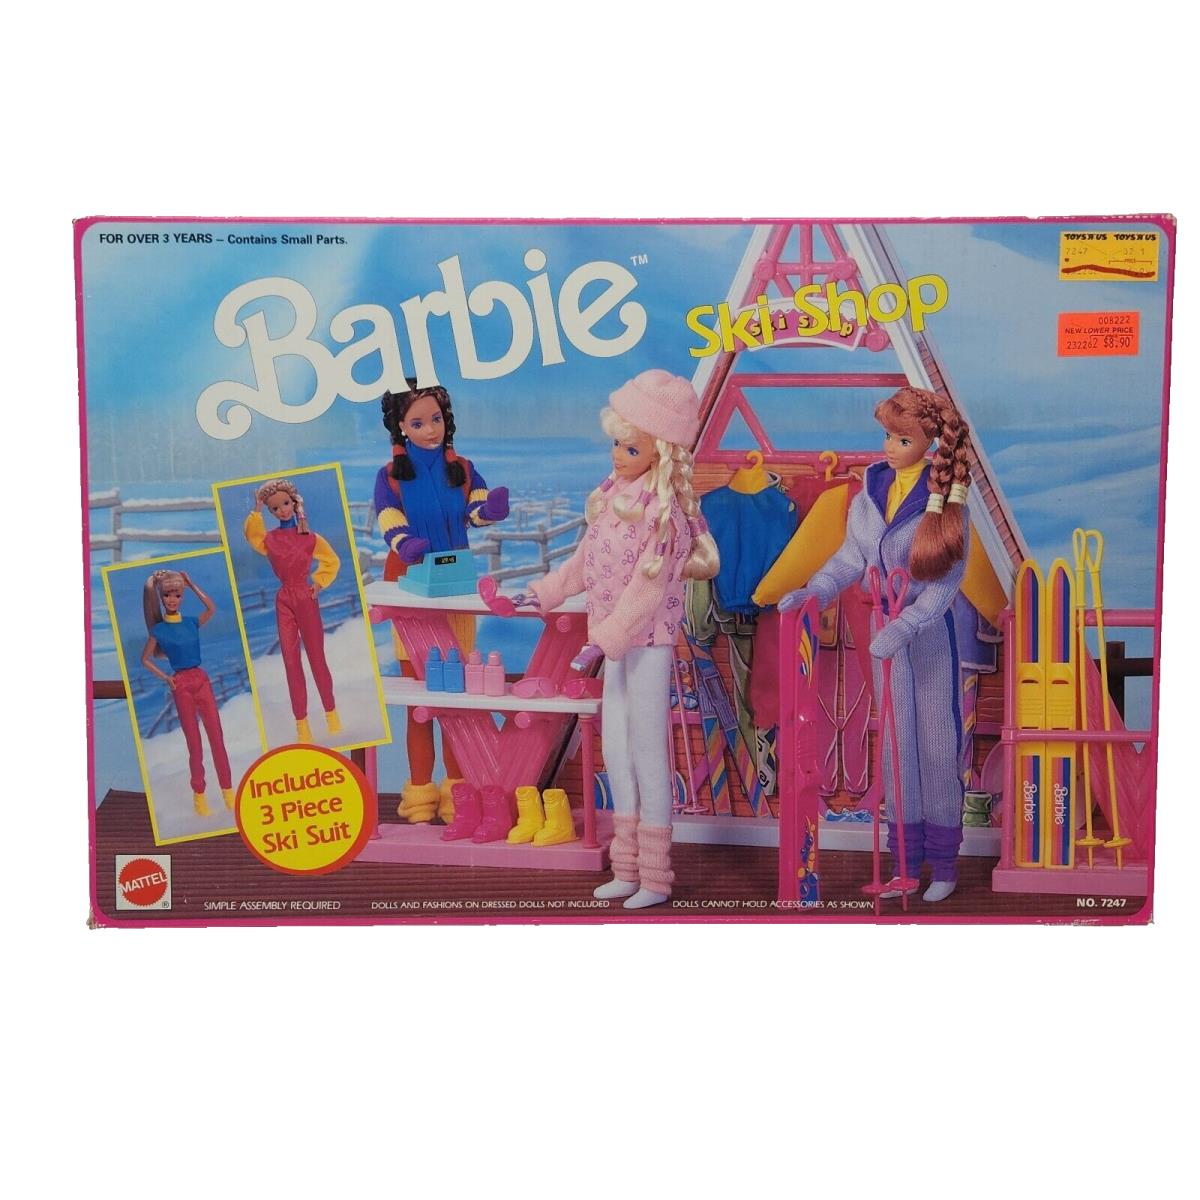 Vintage 1990 Barbie Ski Shop Playset Complete Box IN Box 7247